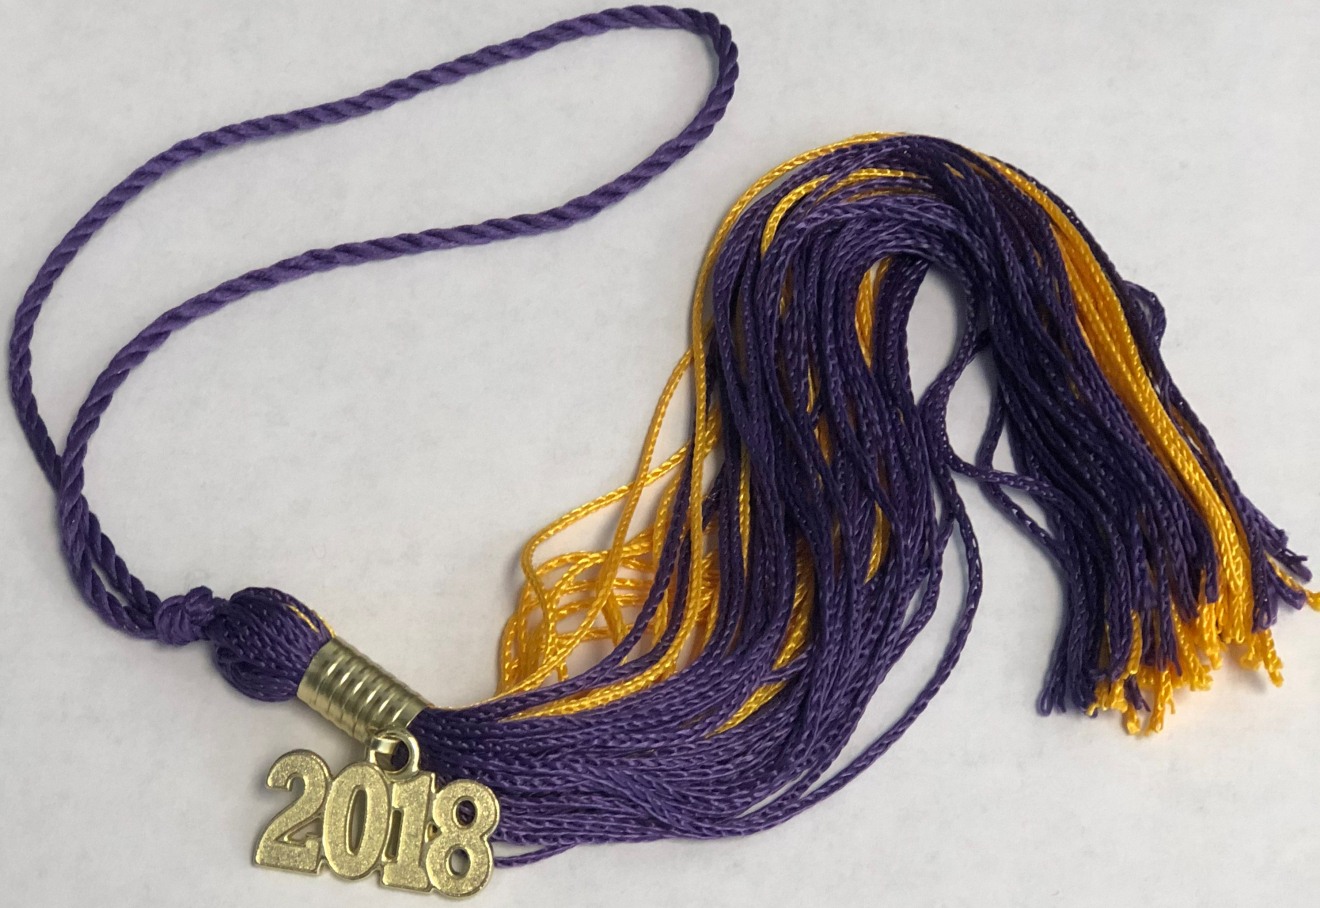 2018 graduation tassel